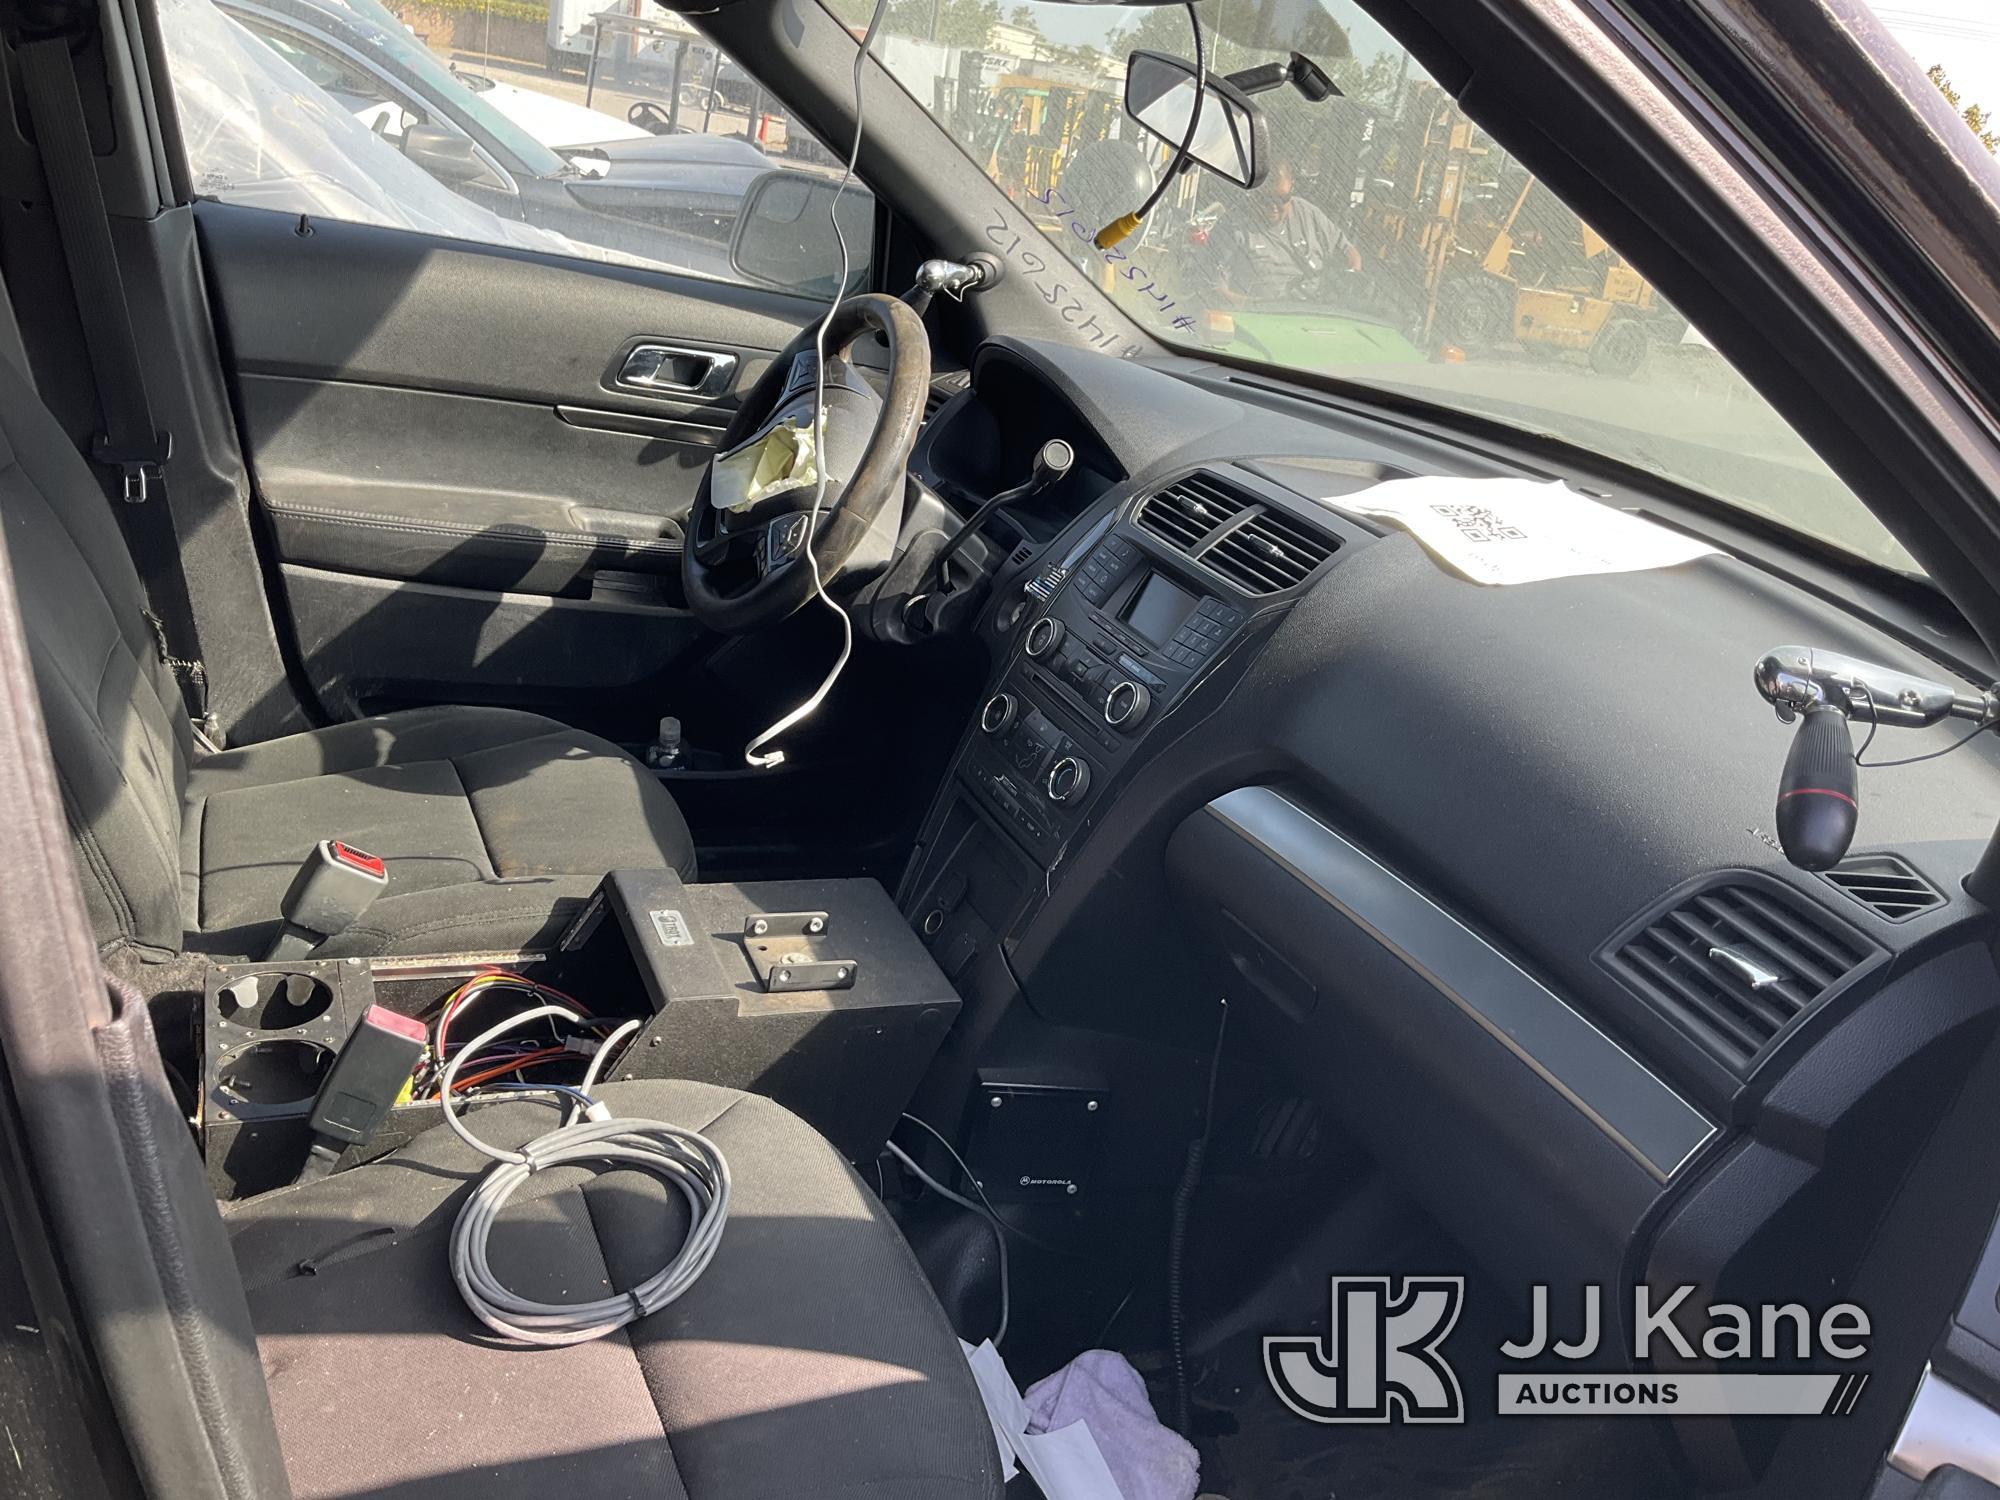 (Jurupa Valley, CA) 2017 Ford Explorer AWD Police Interceptor Sport Utility Vehicle Vehicle Wrecked,